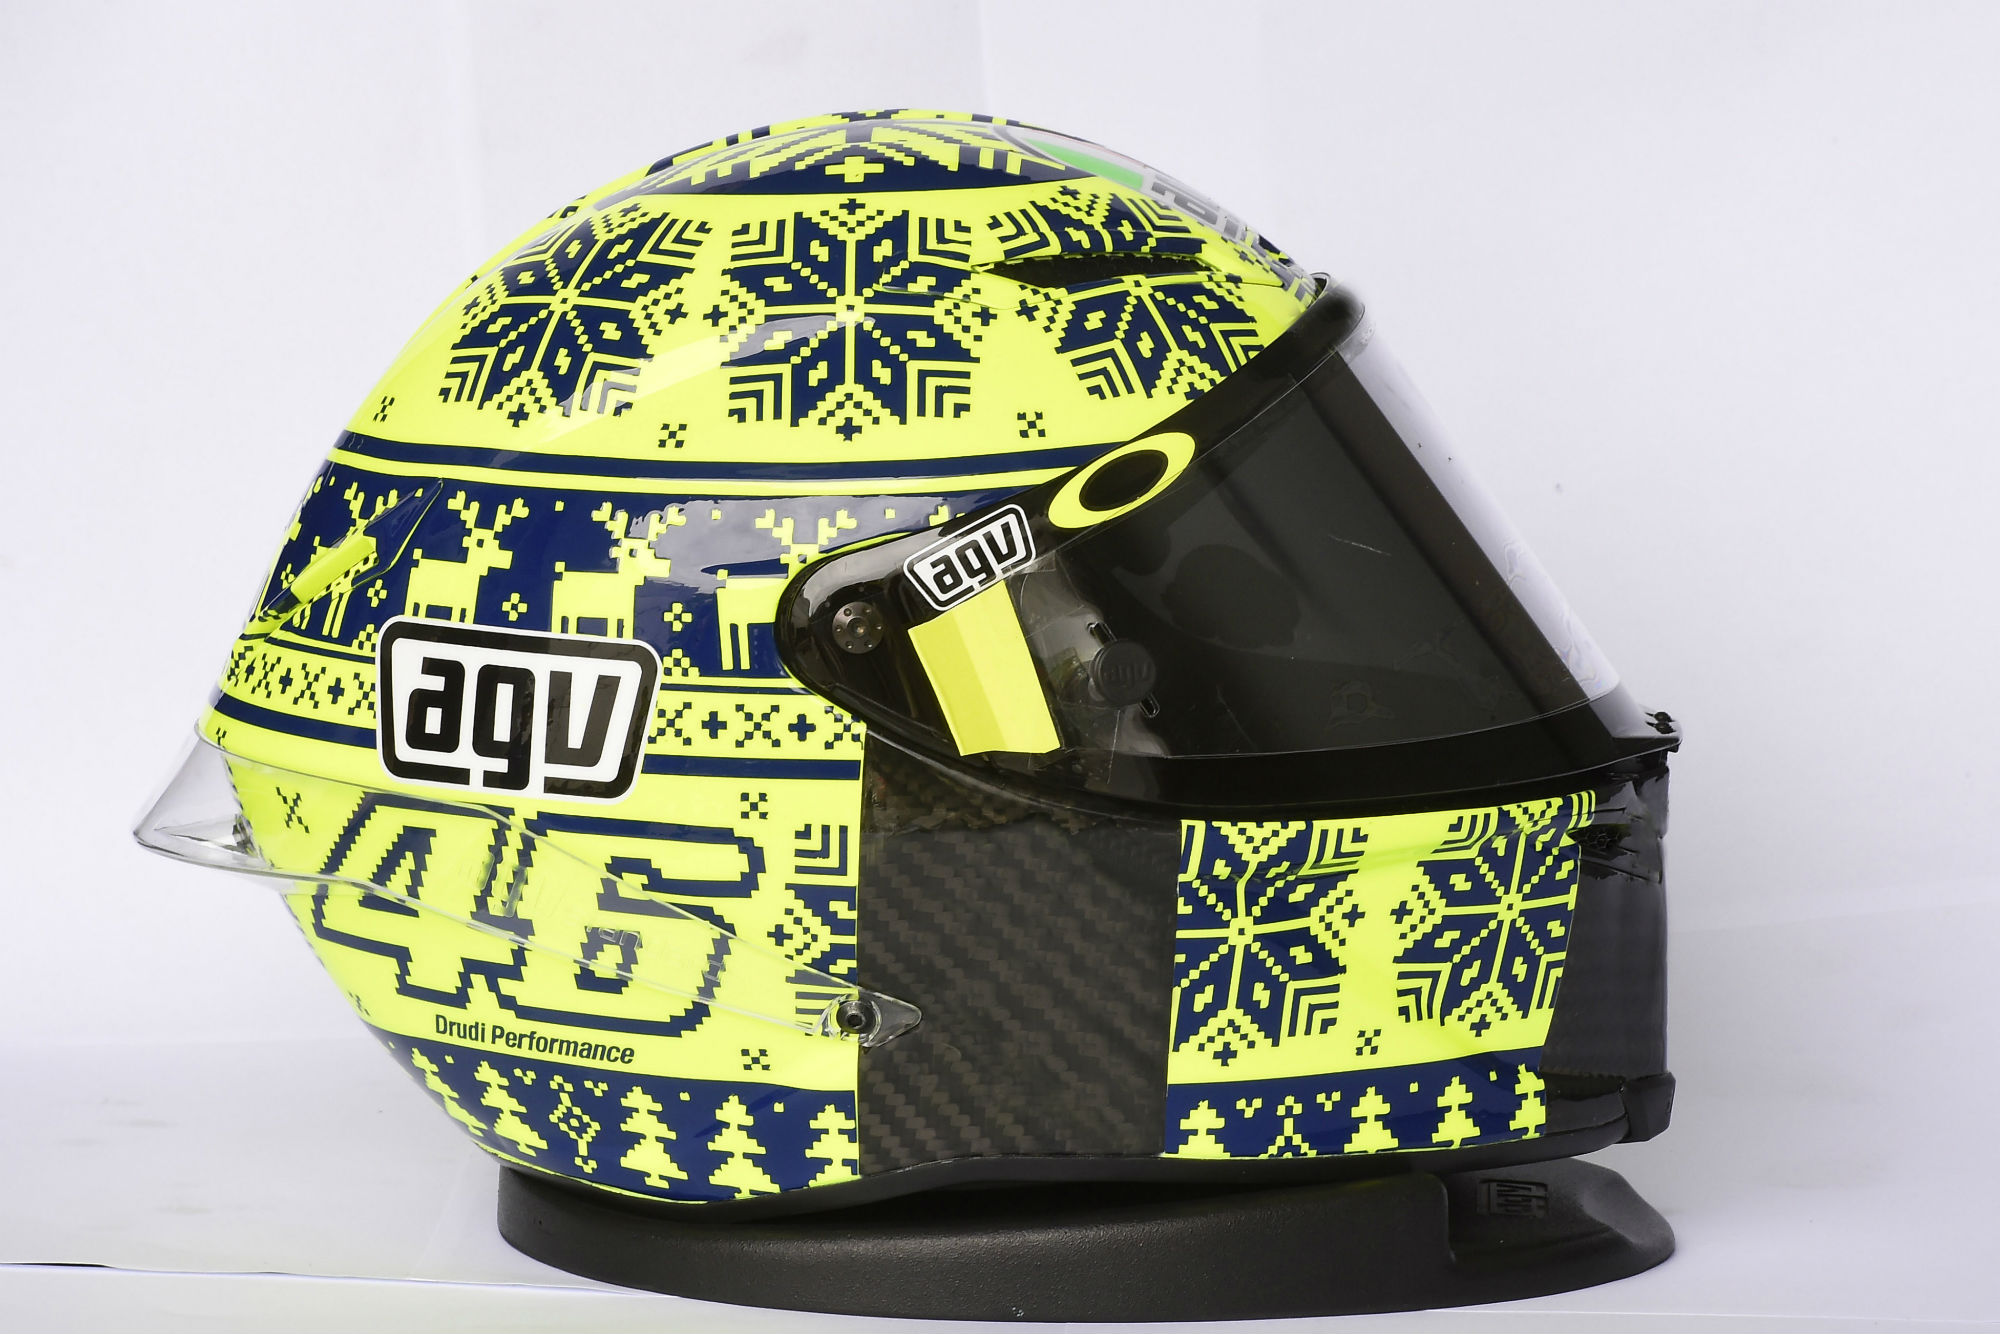 New: Valentino 'Winter Test' replica AGV helmet Visordown